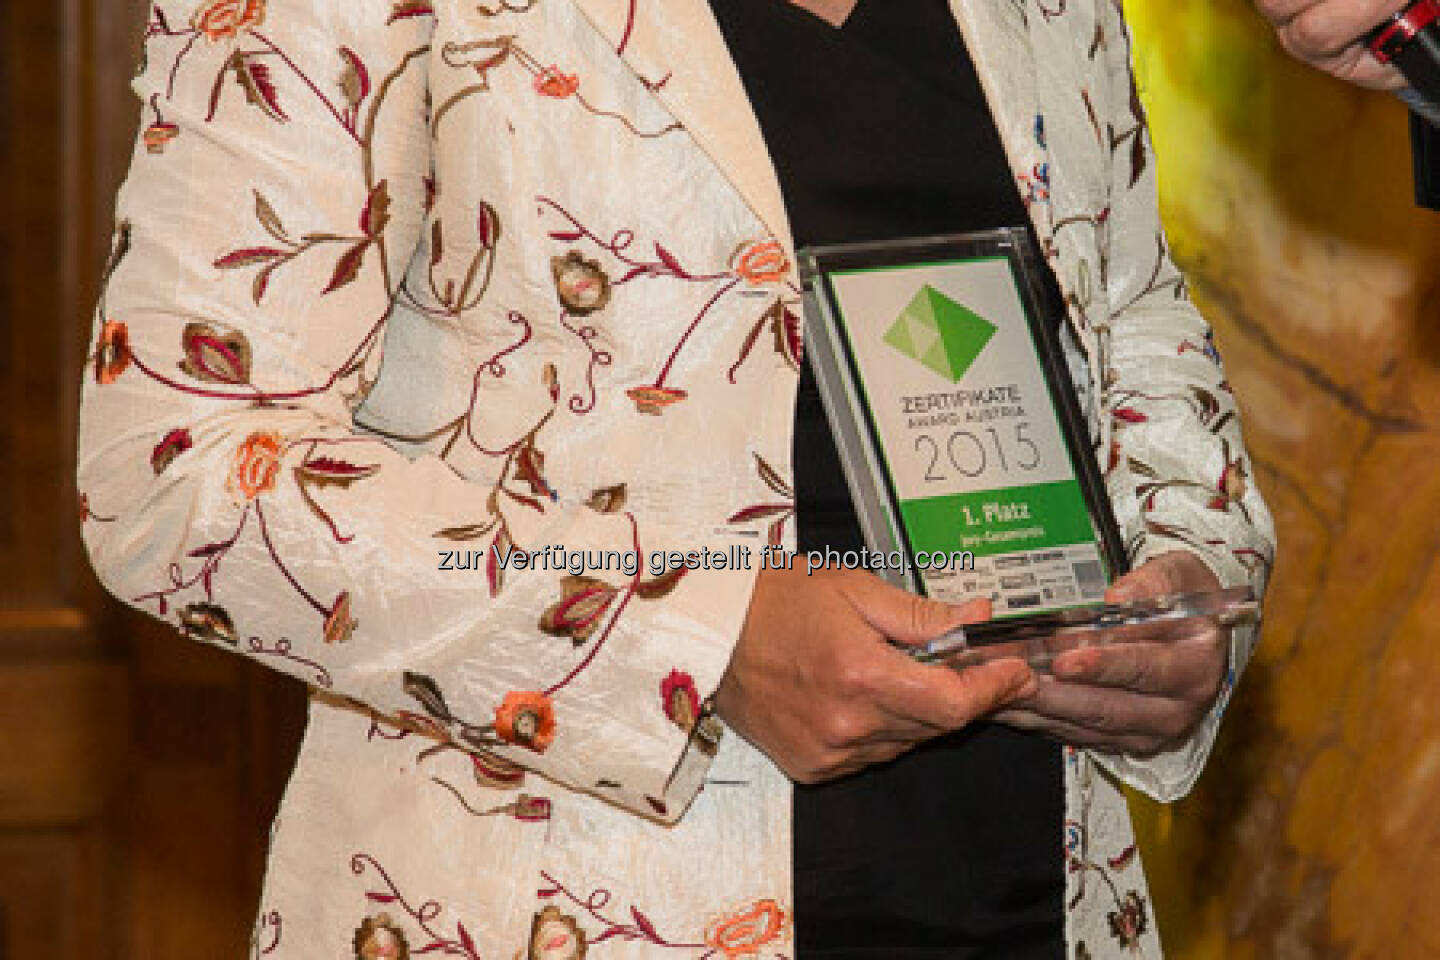 Zertifikate Award 2015 - Heike Arbter 1. Platz